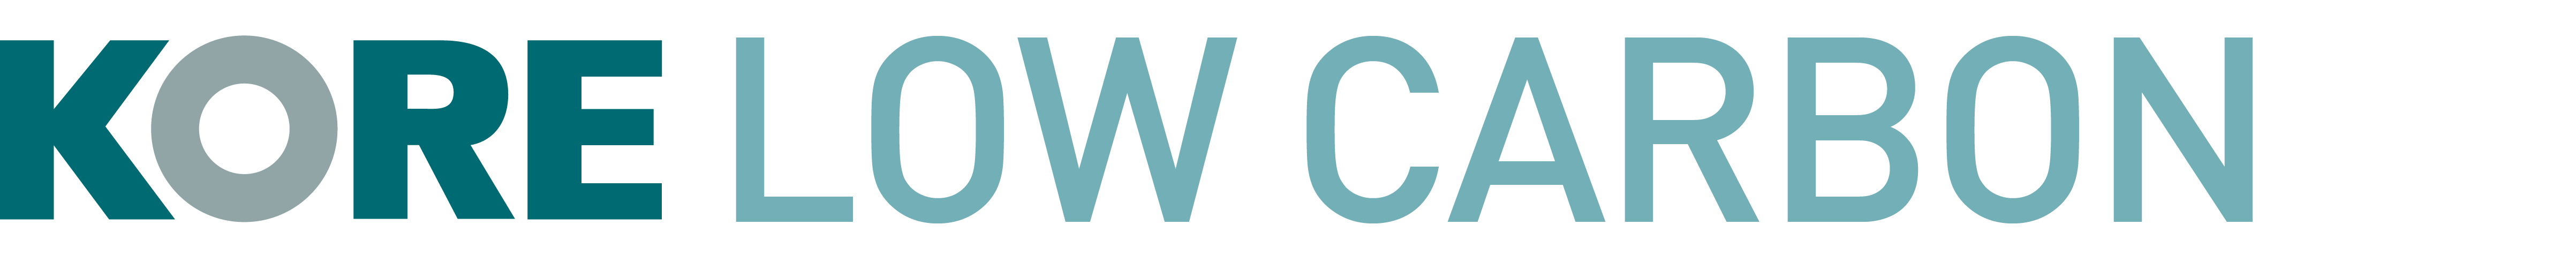 kore-low-carbon-logo